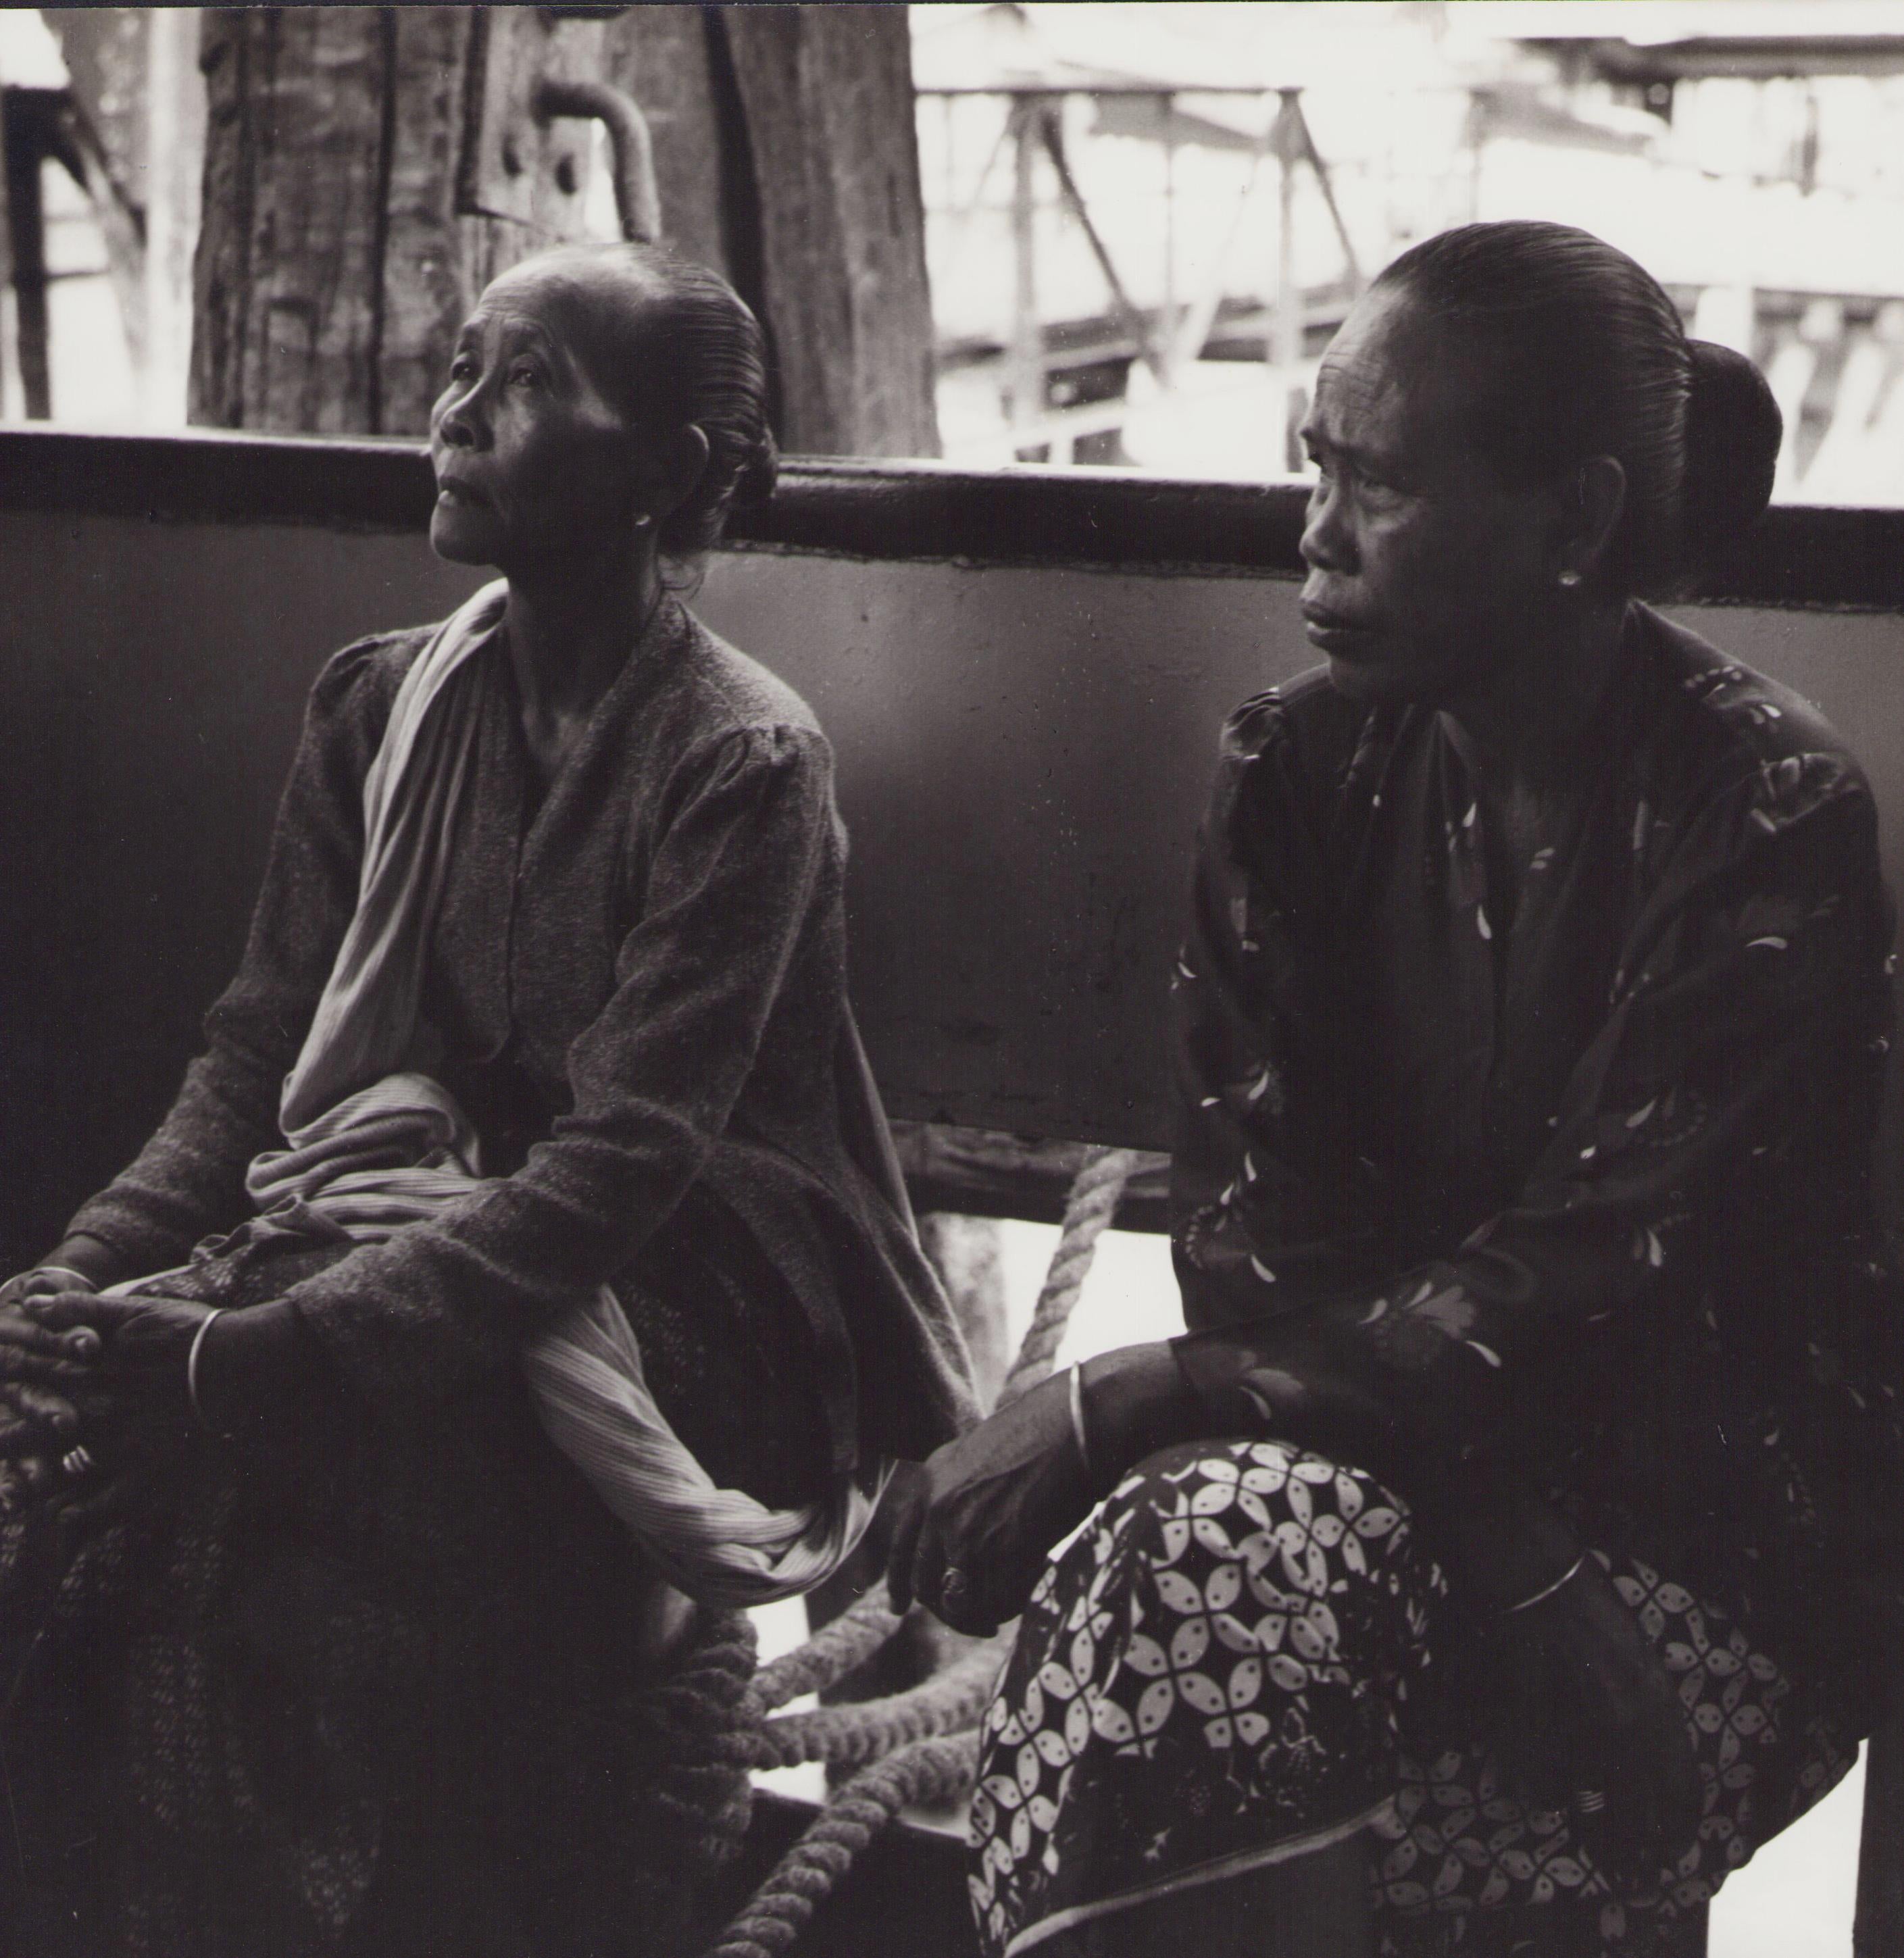 Hanna Seidel Portrait Photograph - Suriname, People, Women, Black and White Photography, 1960s, 24, 5 x 24 cm